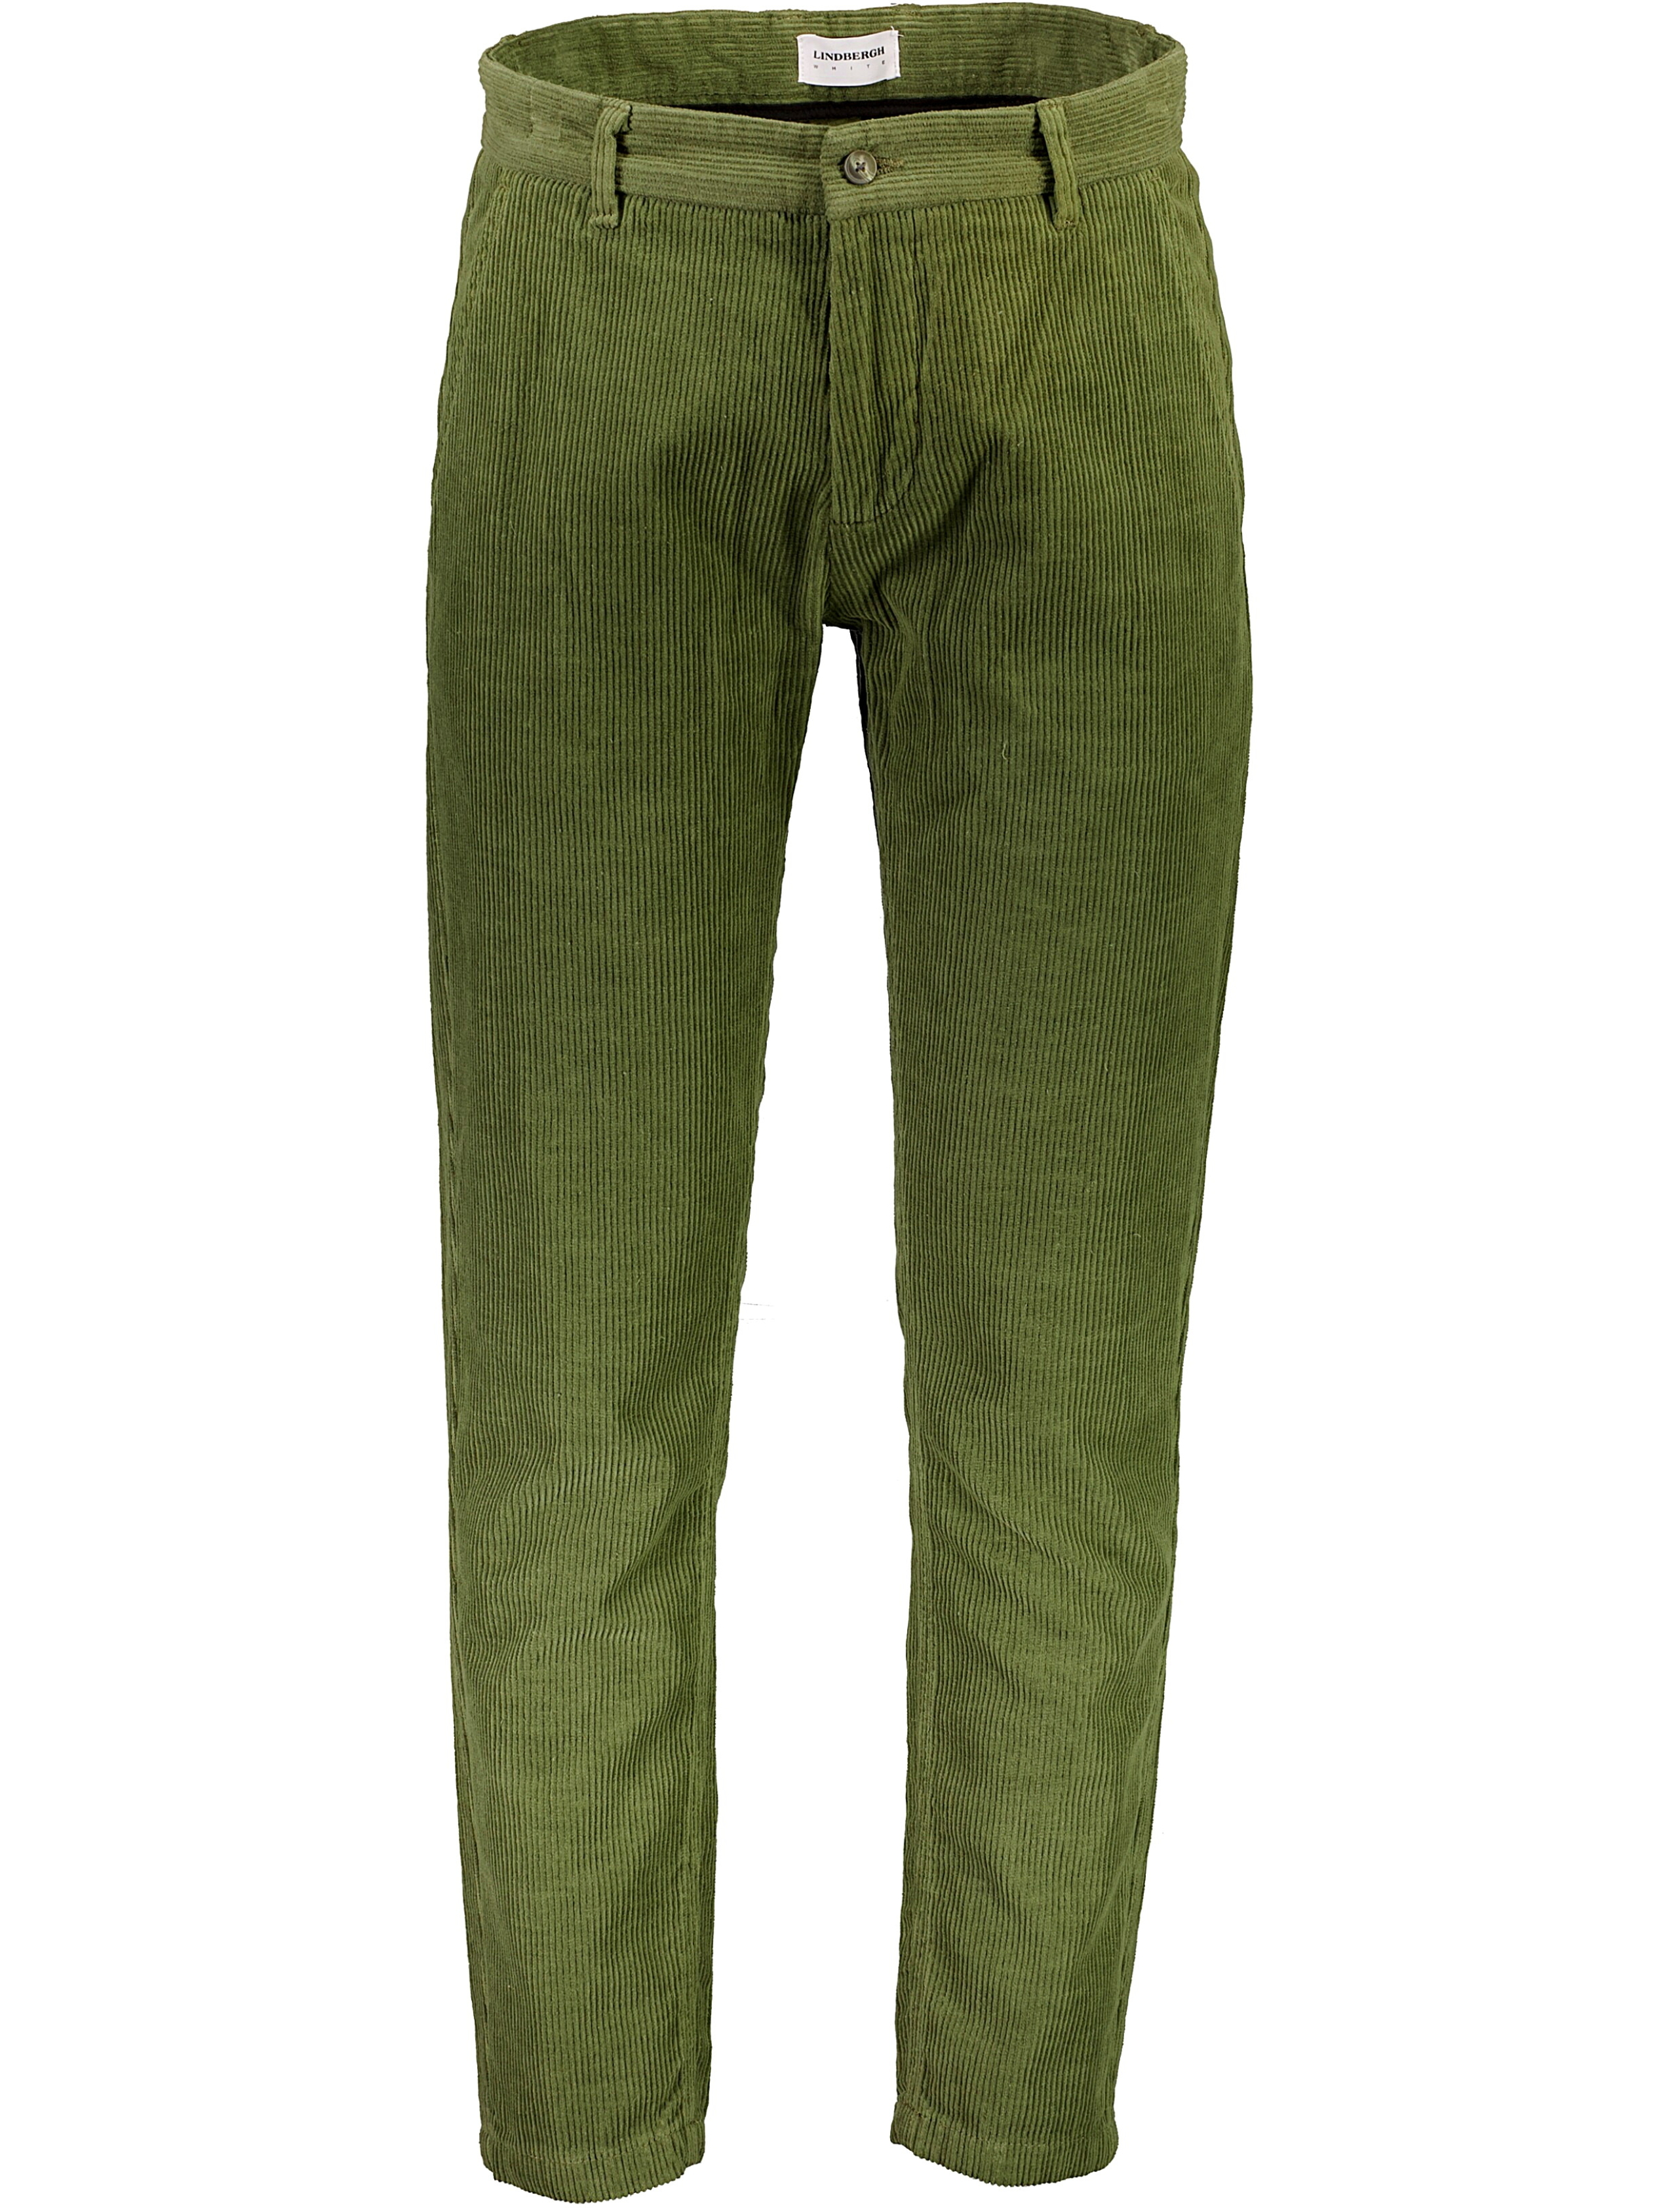 Lindbergh Klassiska byxor grön / army